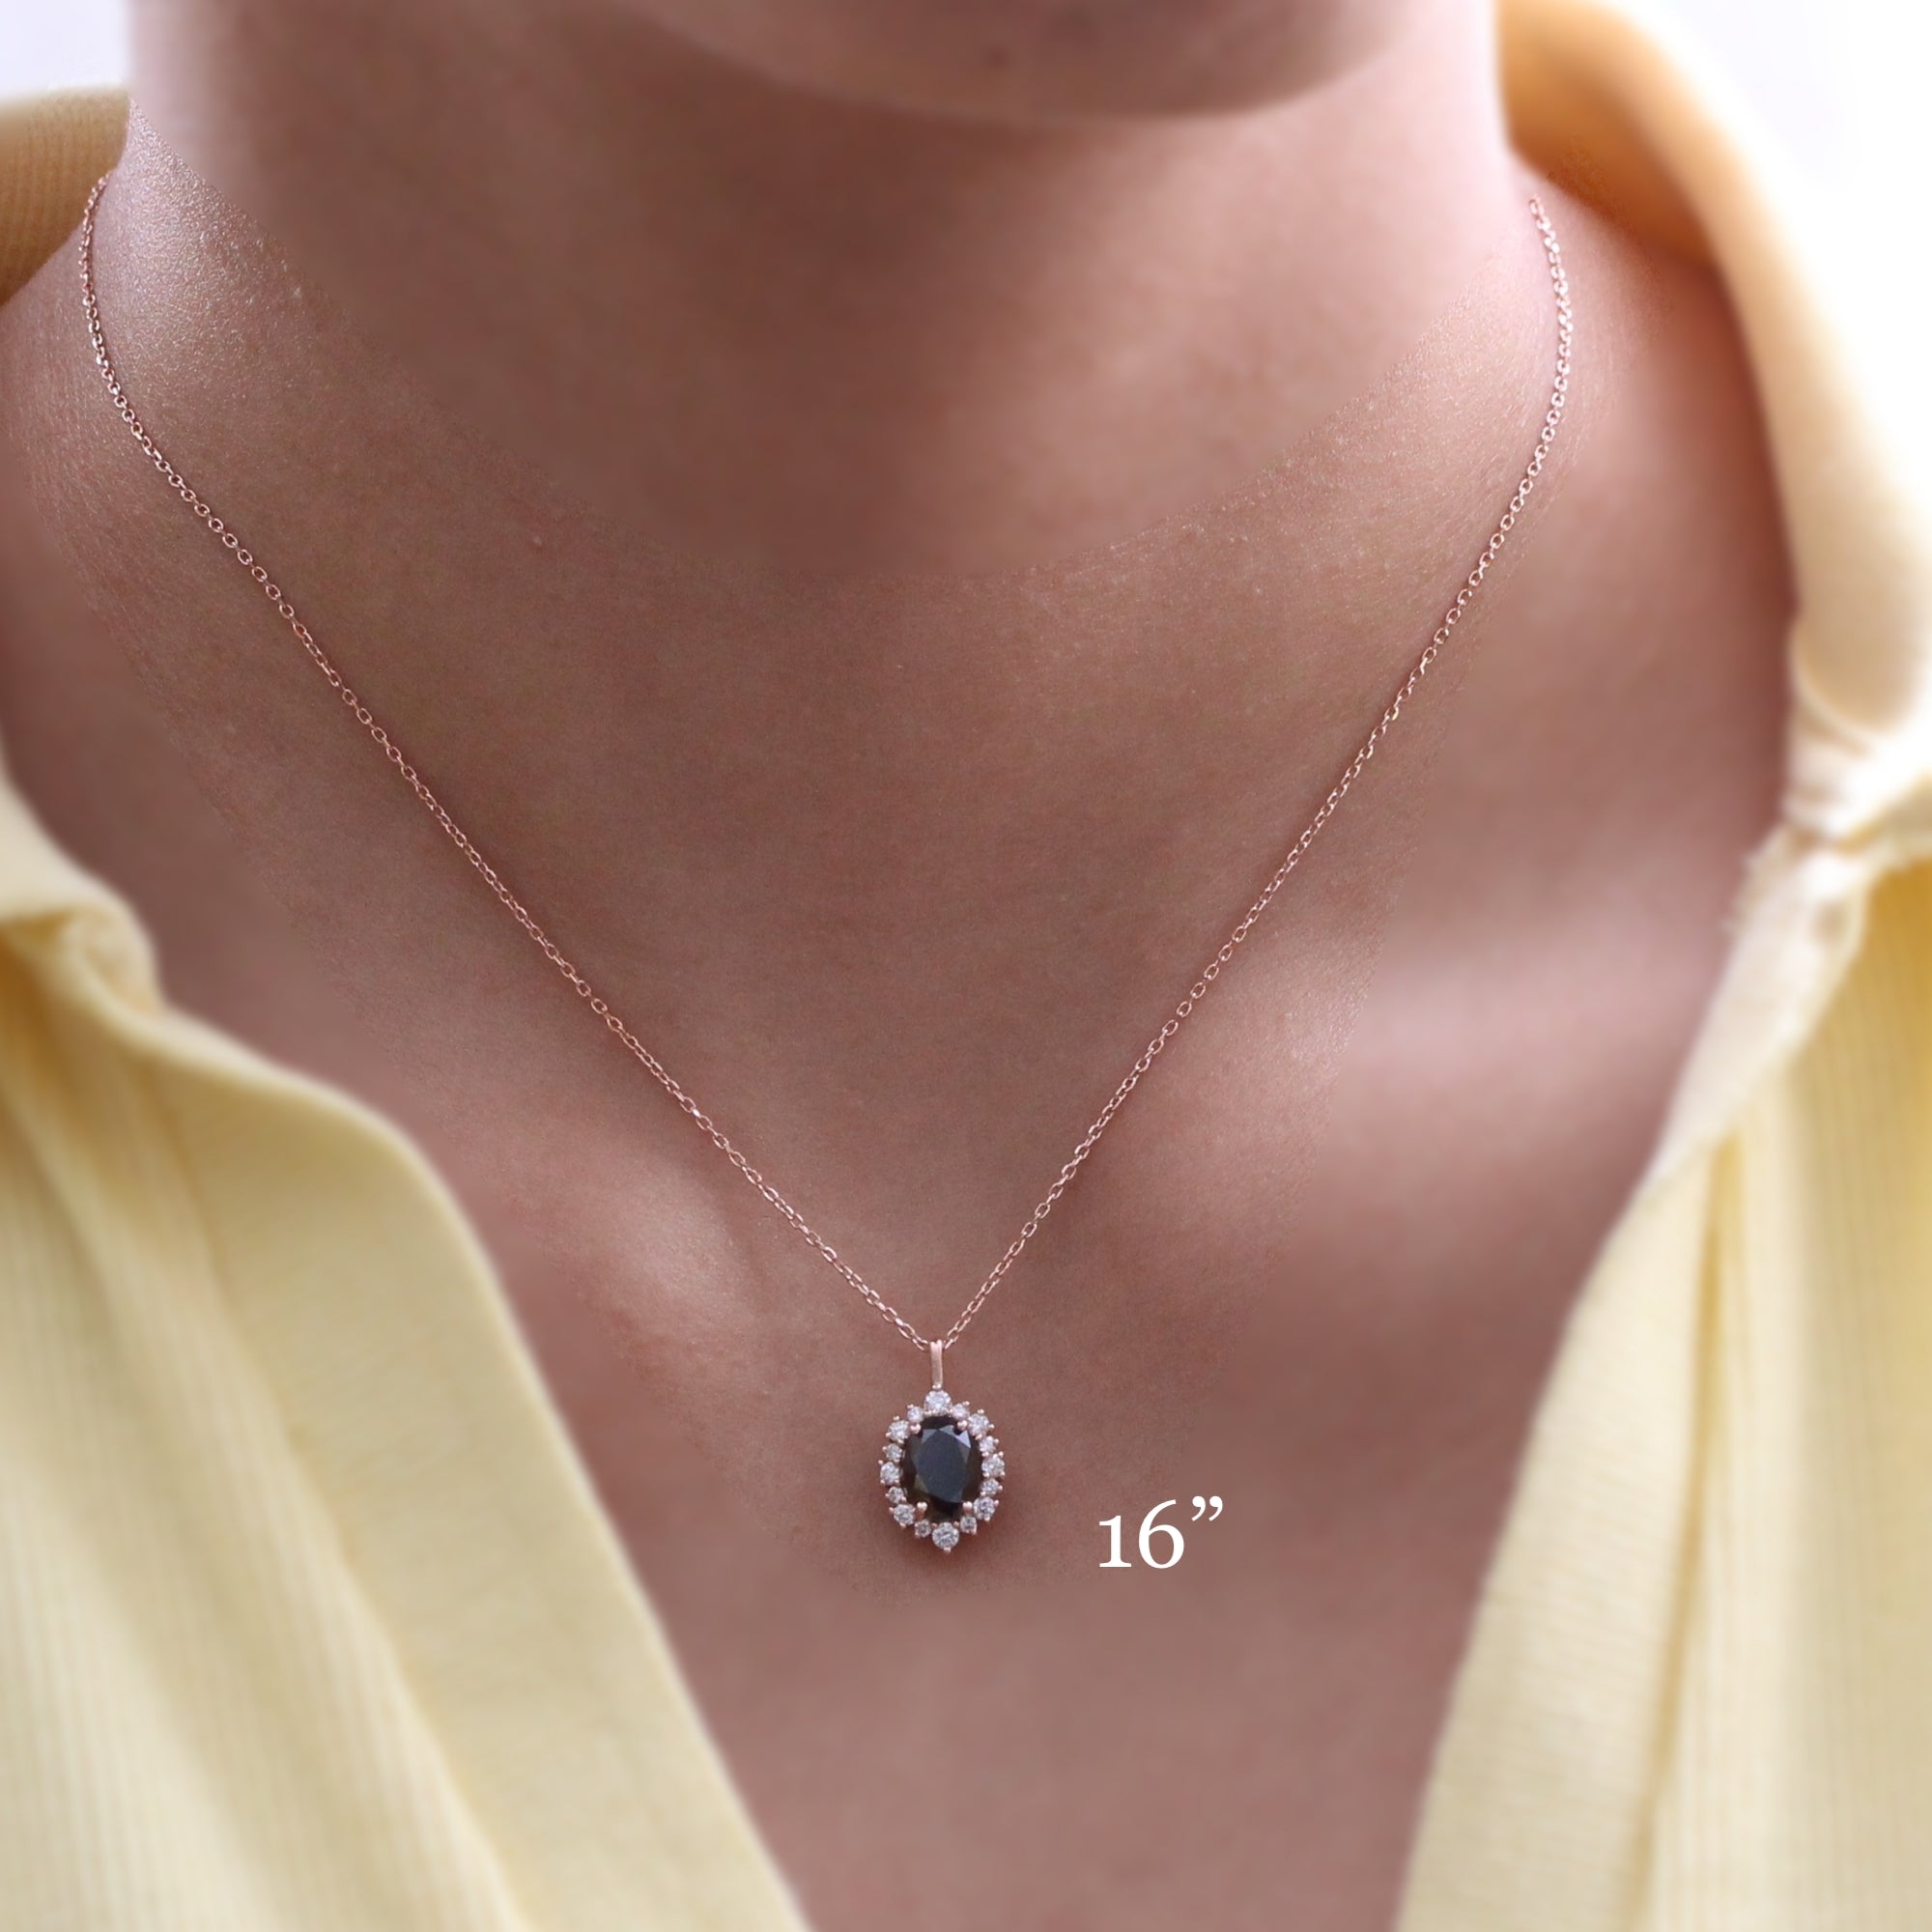 Oval black diamond necklace rose gold halo style black diamond drop pendant necklace la more design jewelry